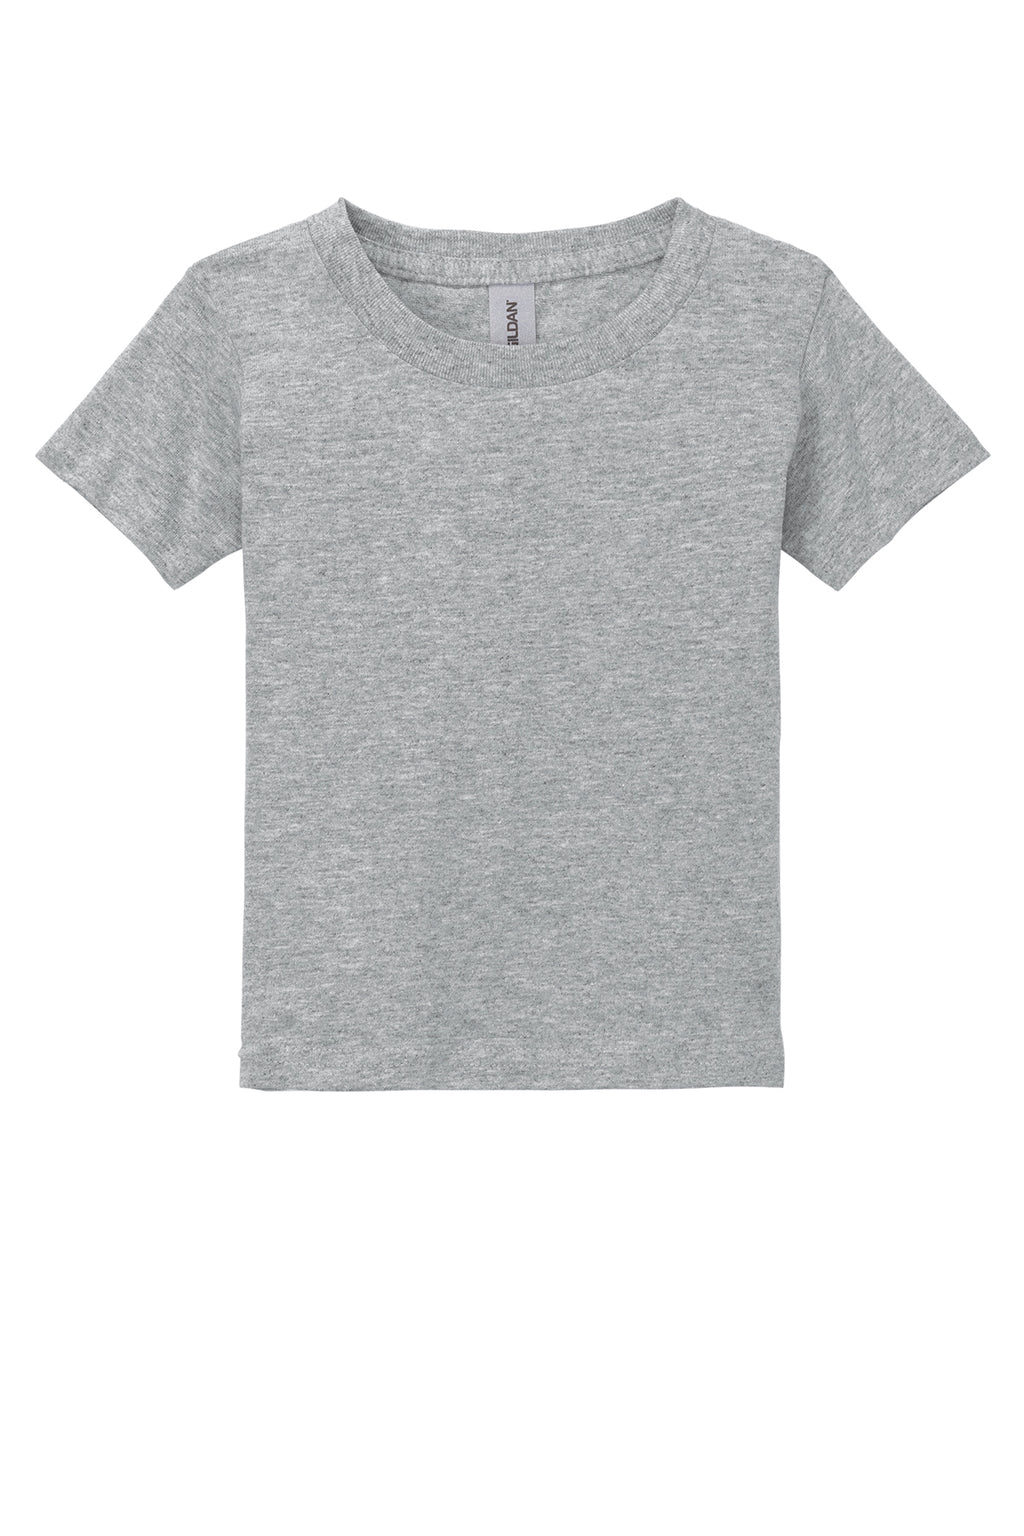 Gildan Toddler 100% Cotton Short Sleeve Shirts Sport Grey